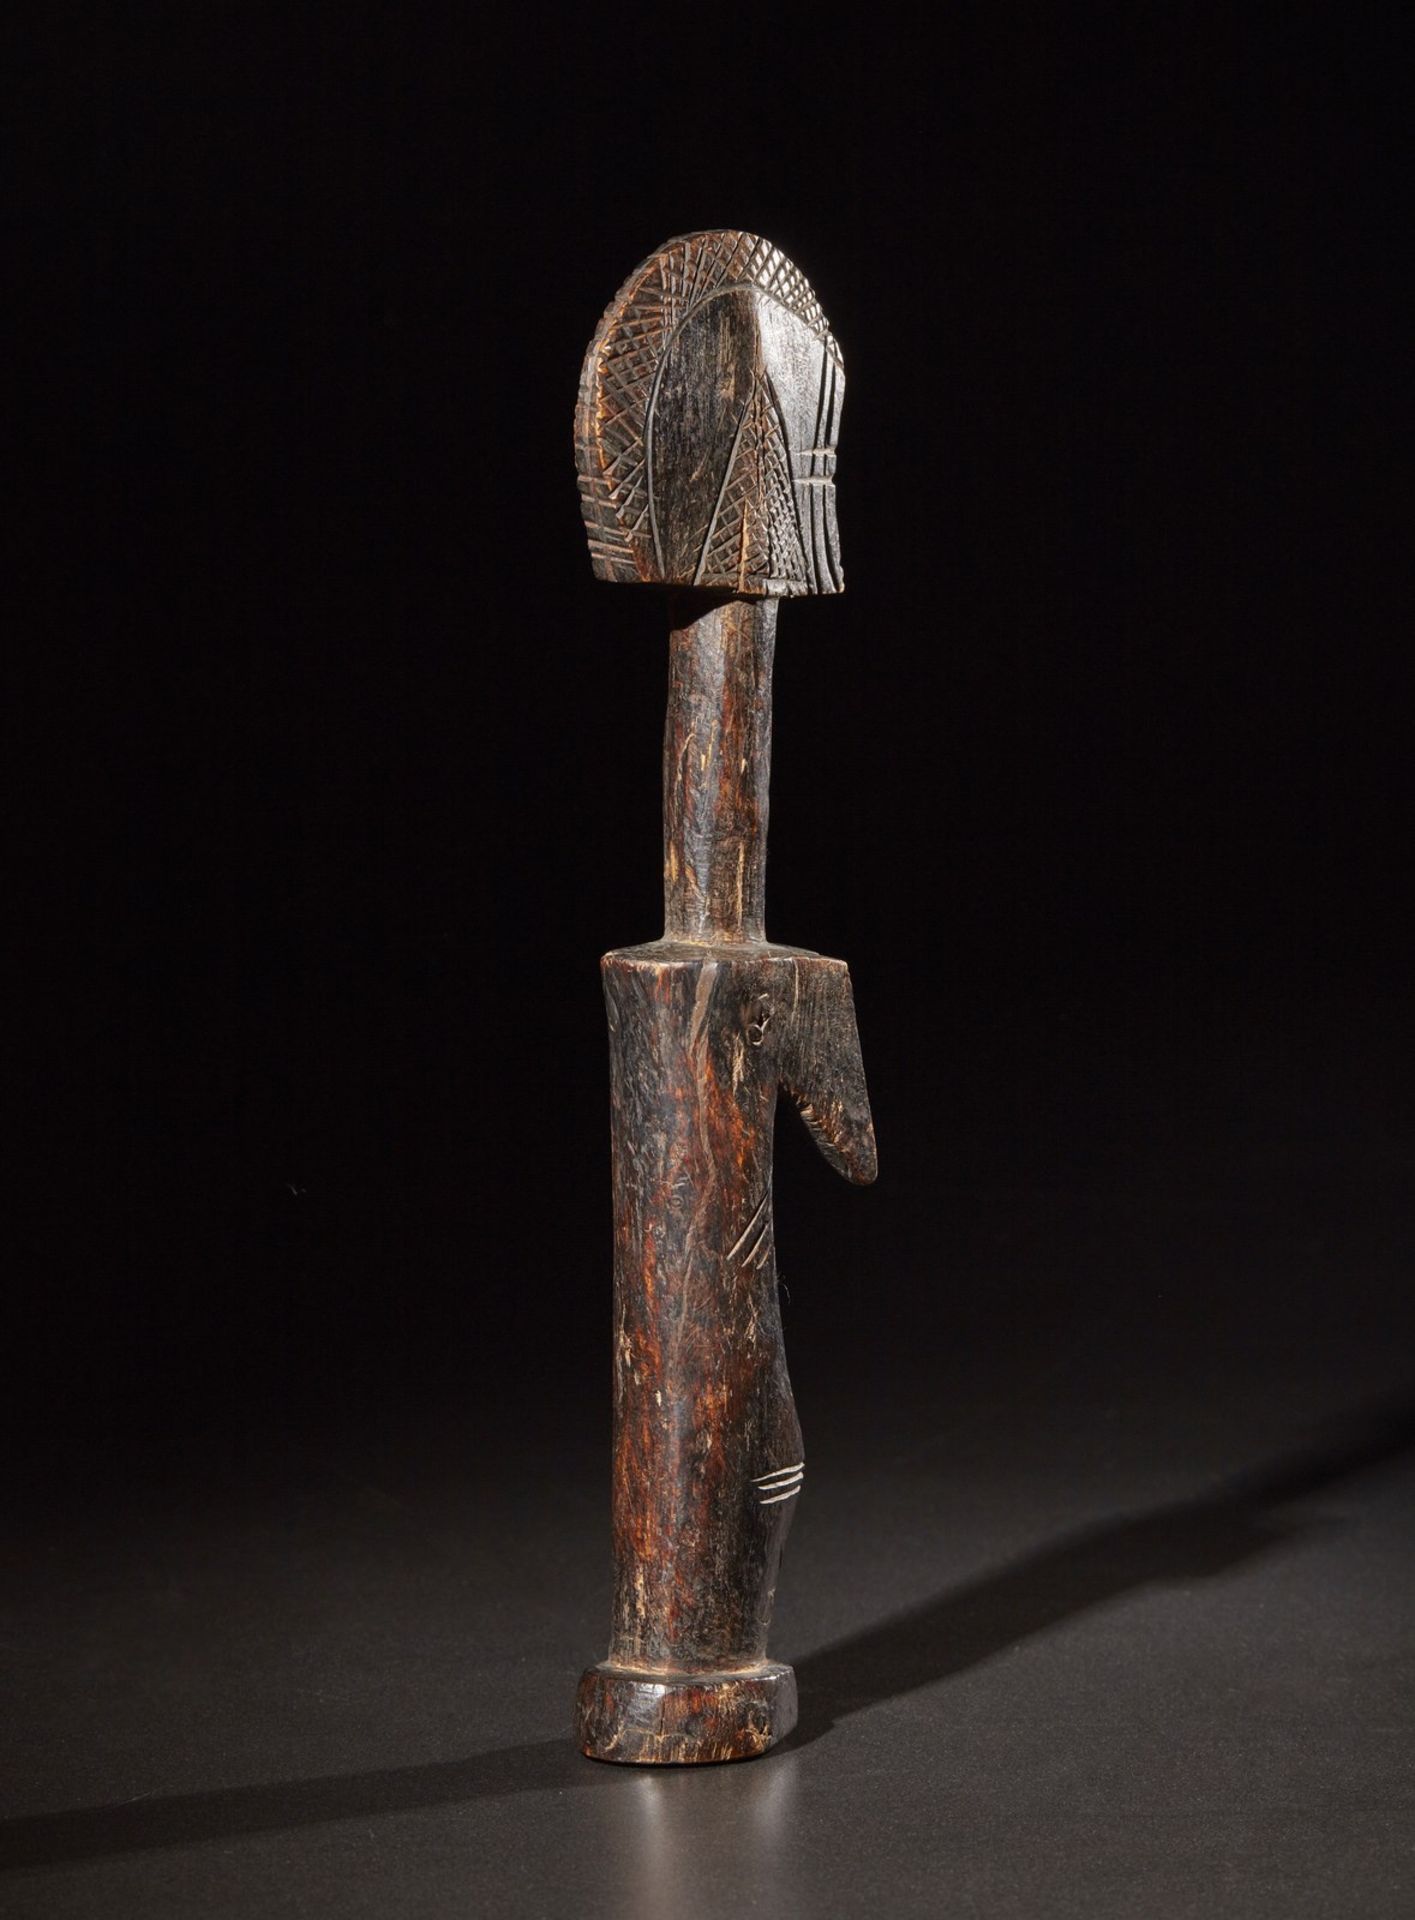 Mossi - Burkina Faso Fertility doll.Hardwood with dark patina.Signs of use. - Image 4 of 4